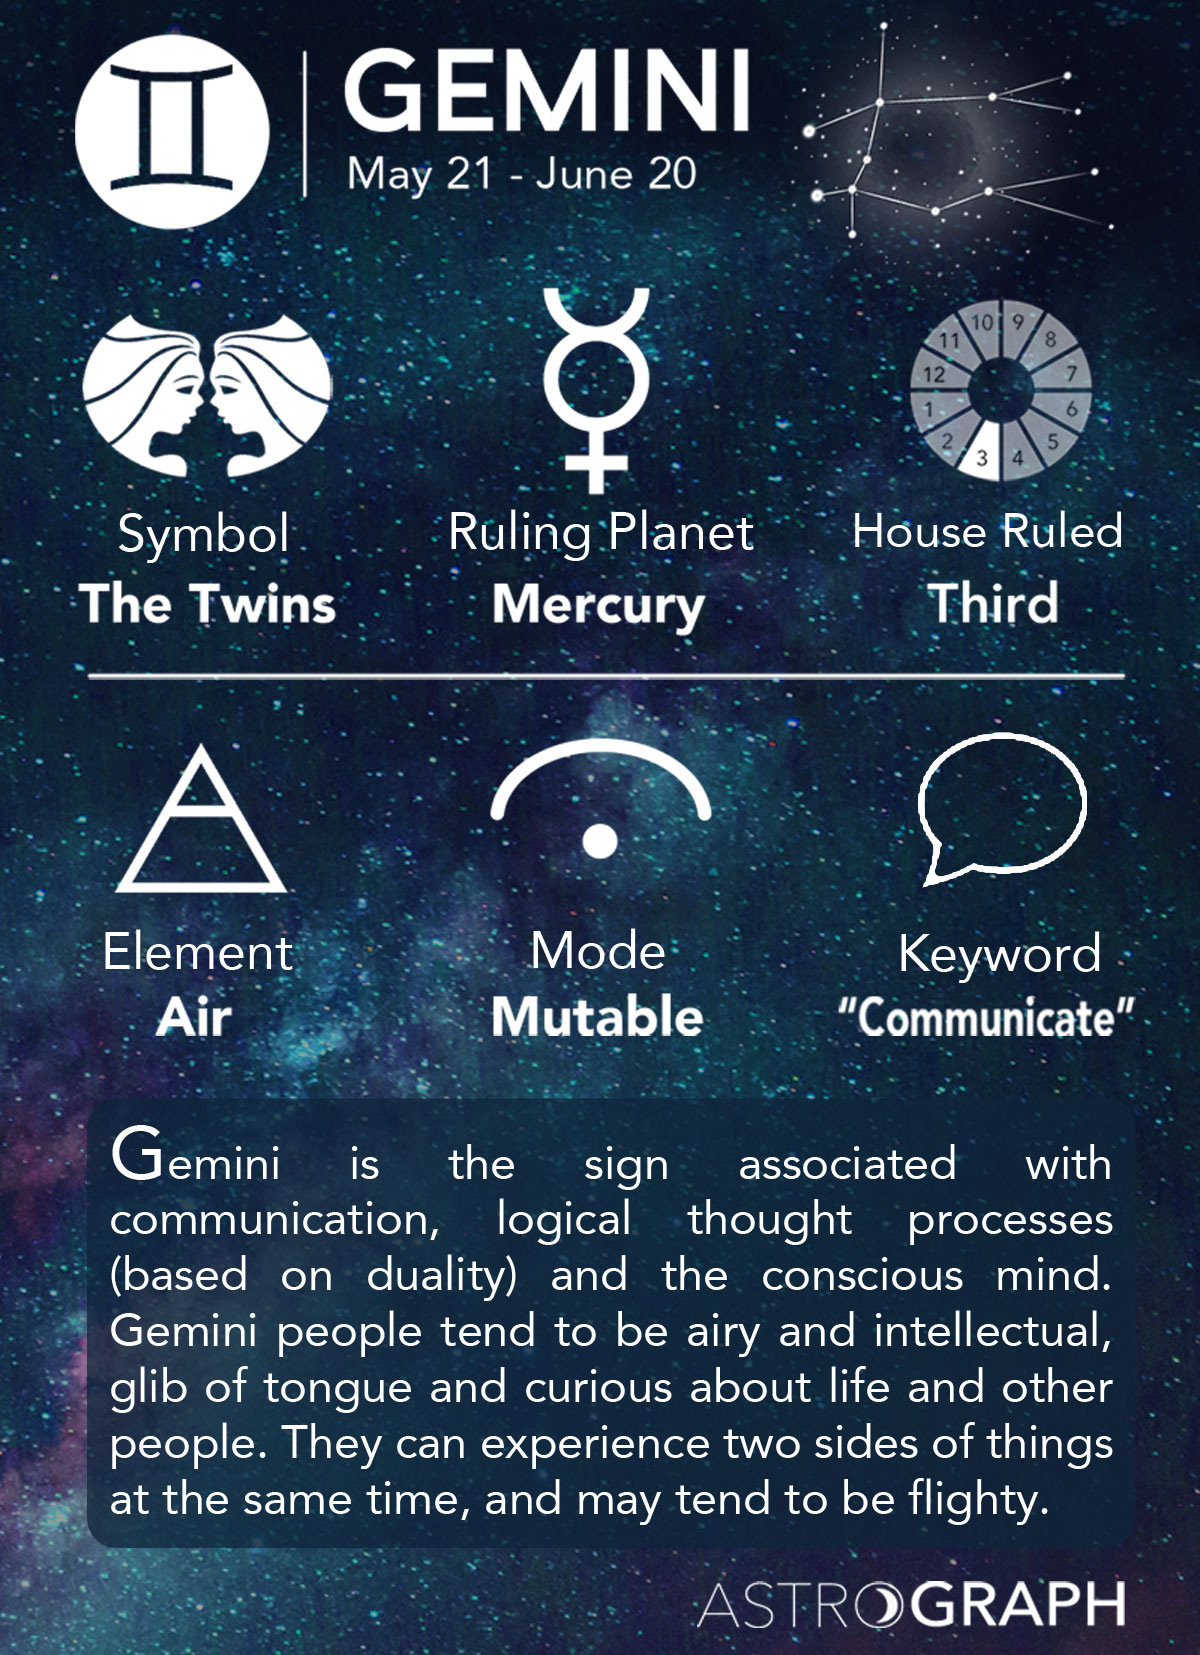 What Is Gemini Date?